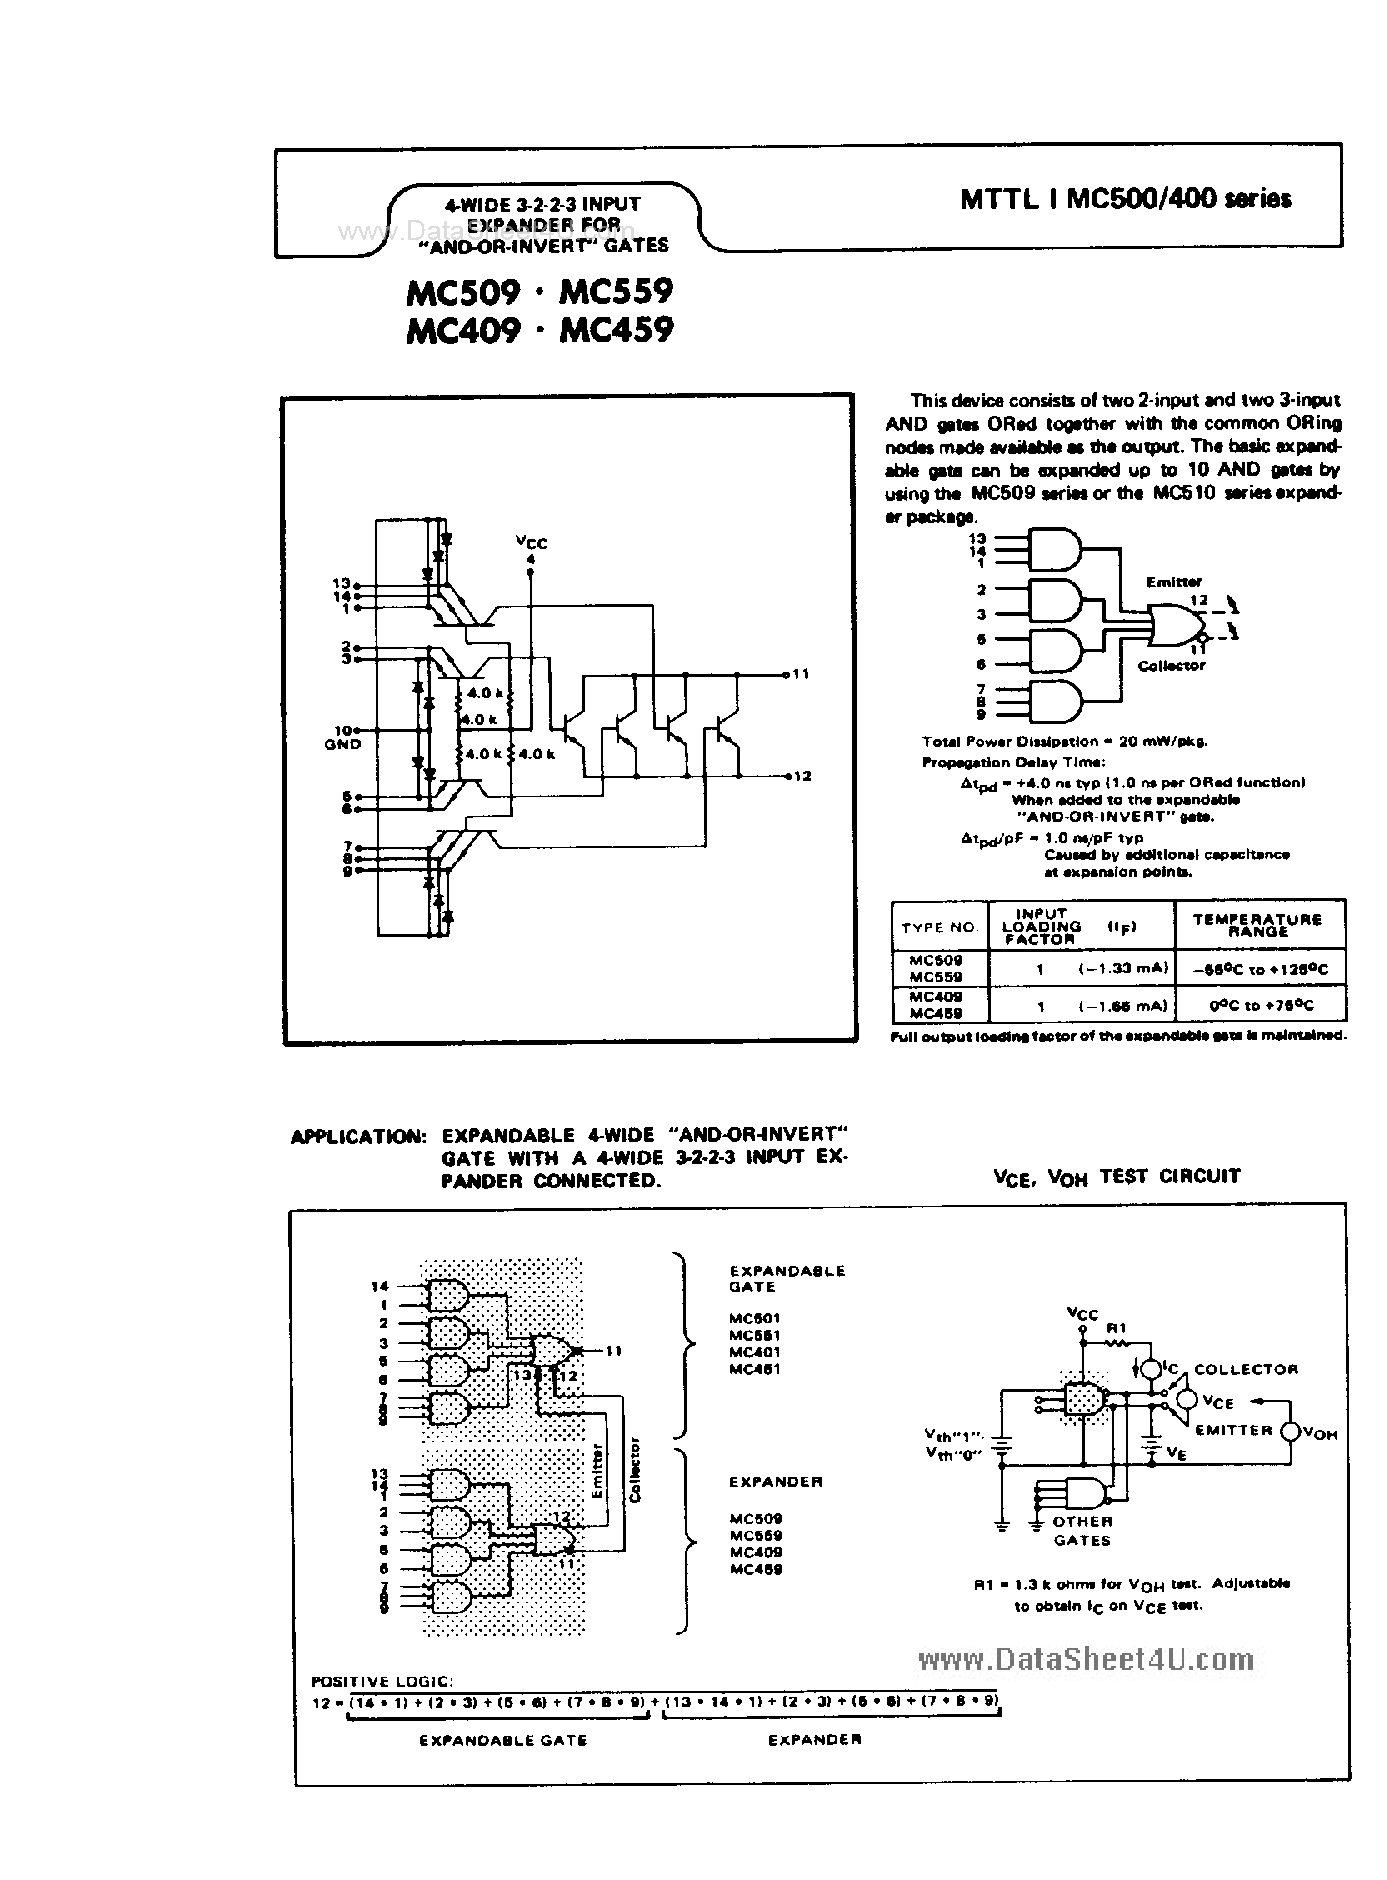 Даташит MC509 - (MC509 / MC559) 4 wide 3-2-2-3 input expander страница 1